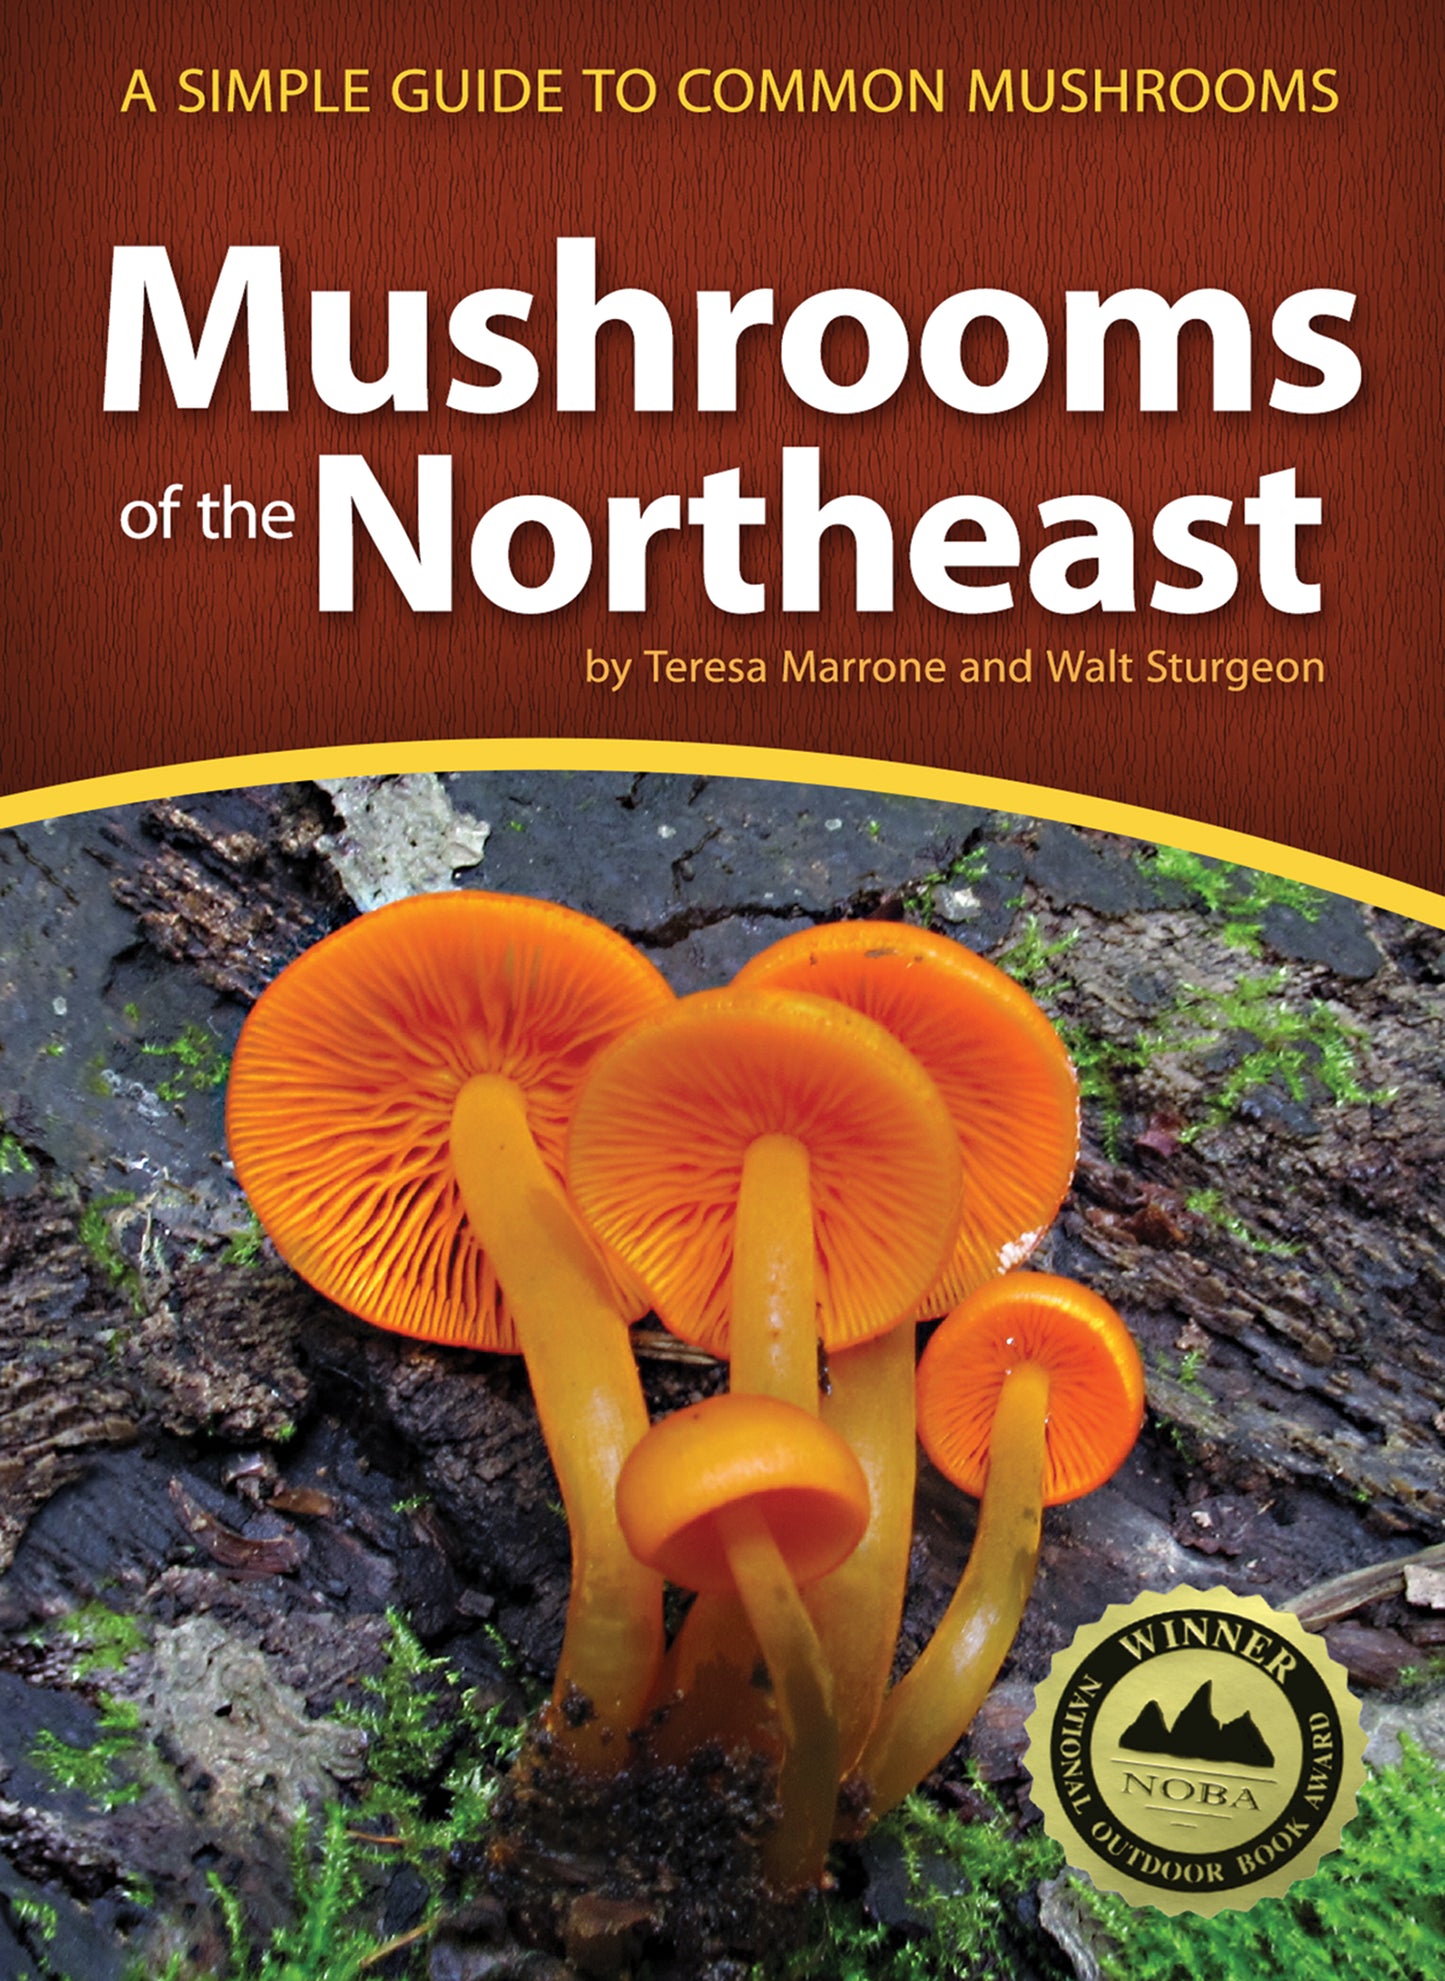 Mushrooms of the Northeast by Teresa Marrone & Walt Sturgeon